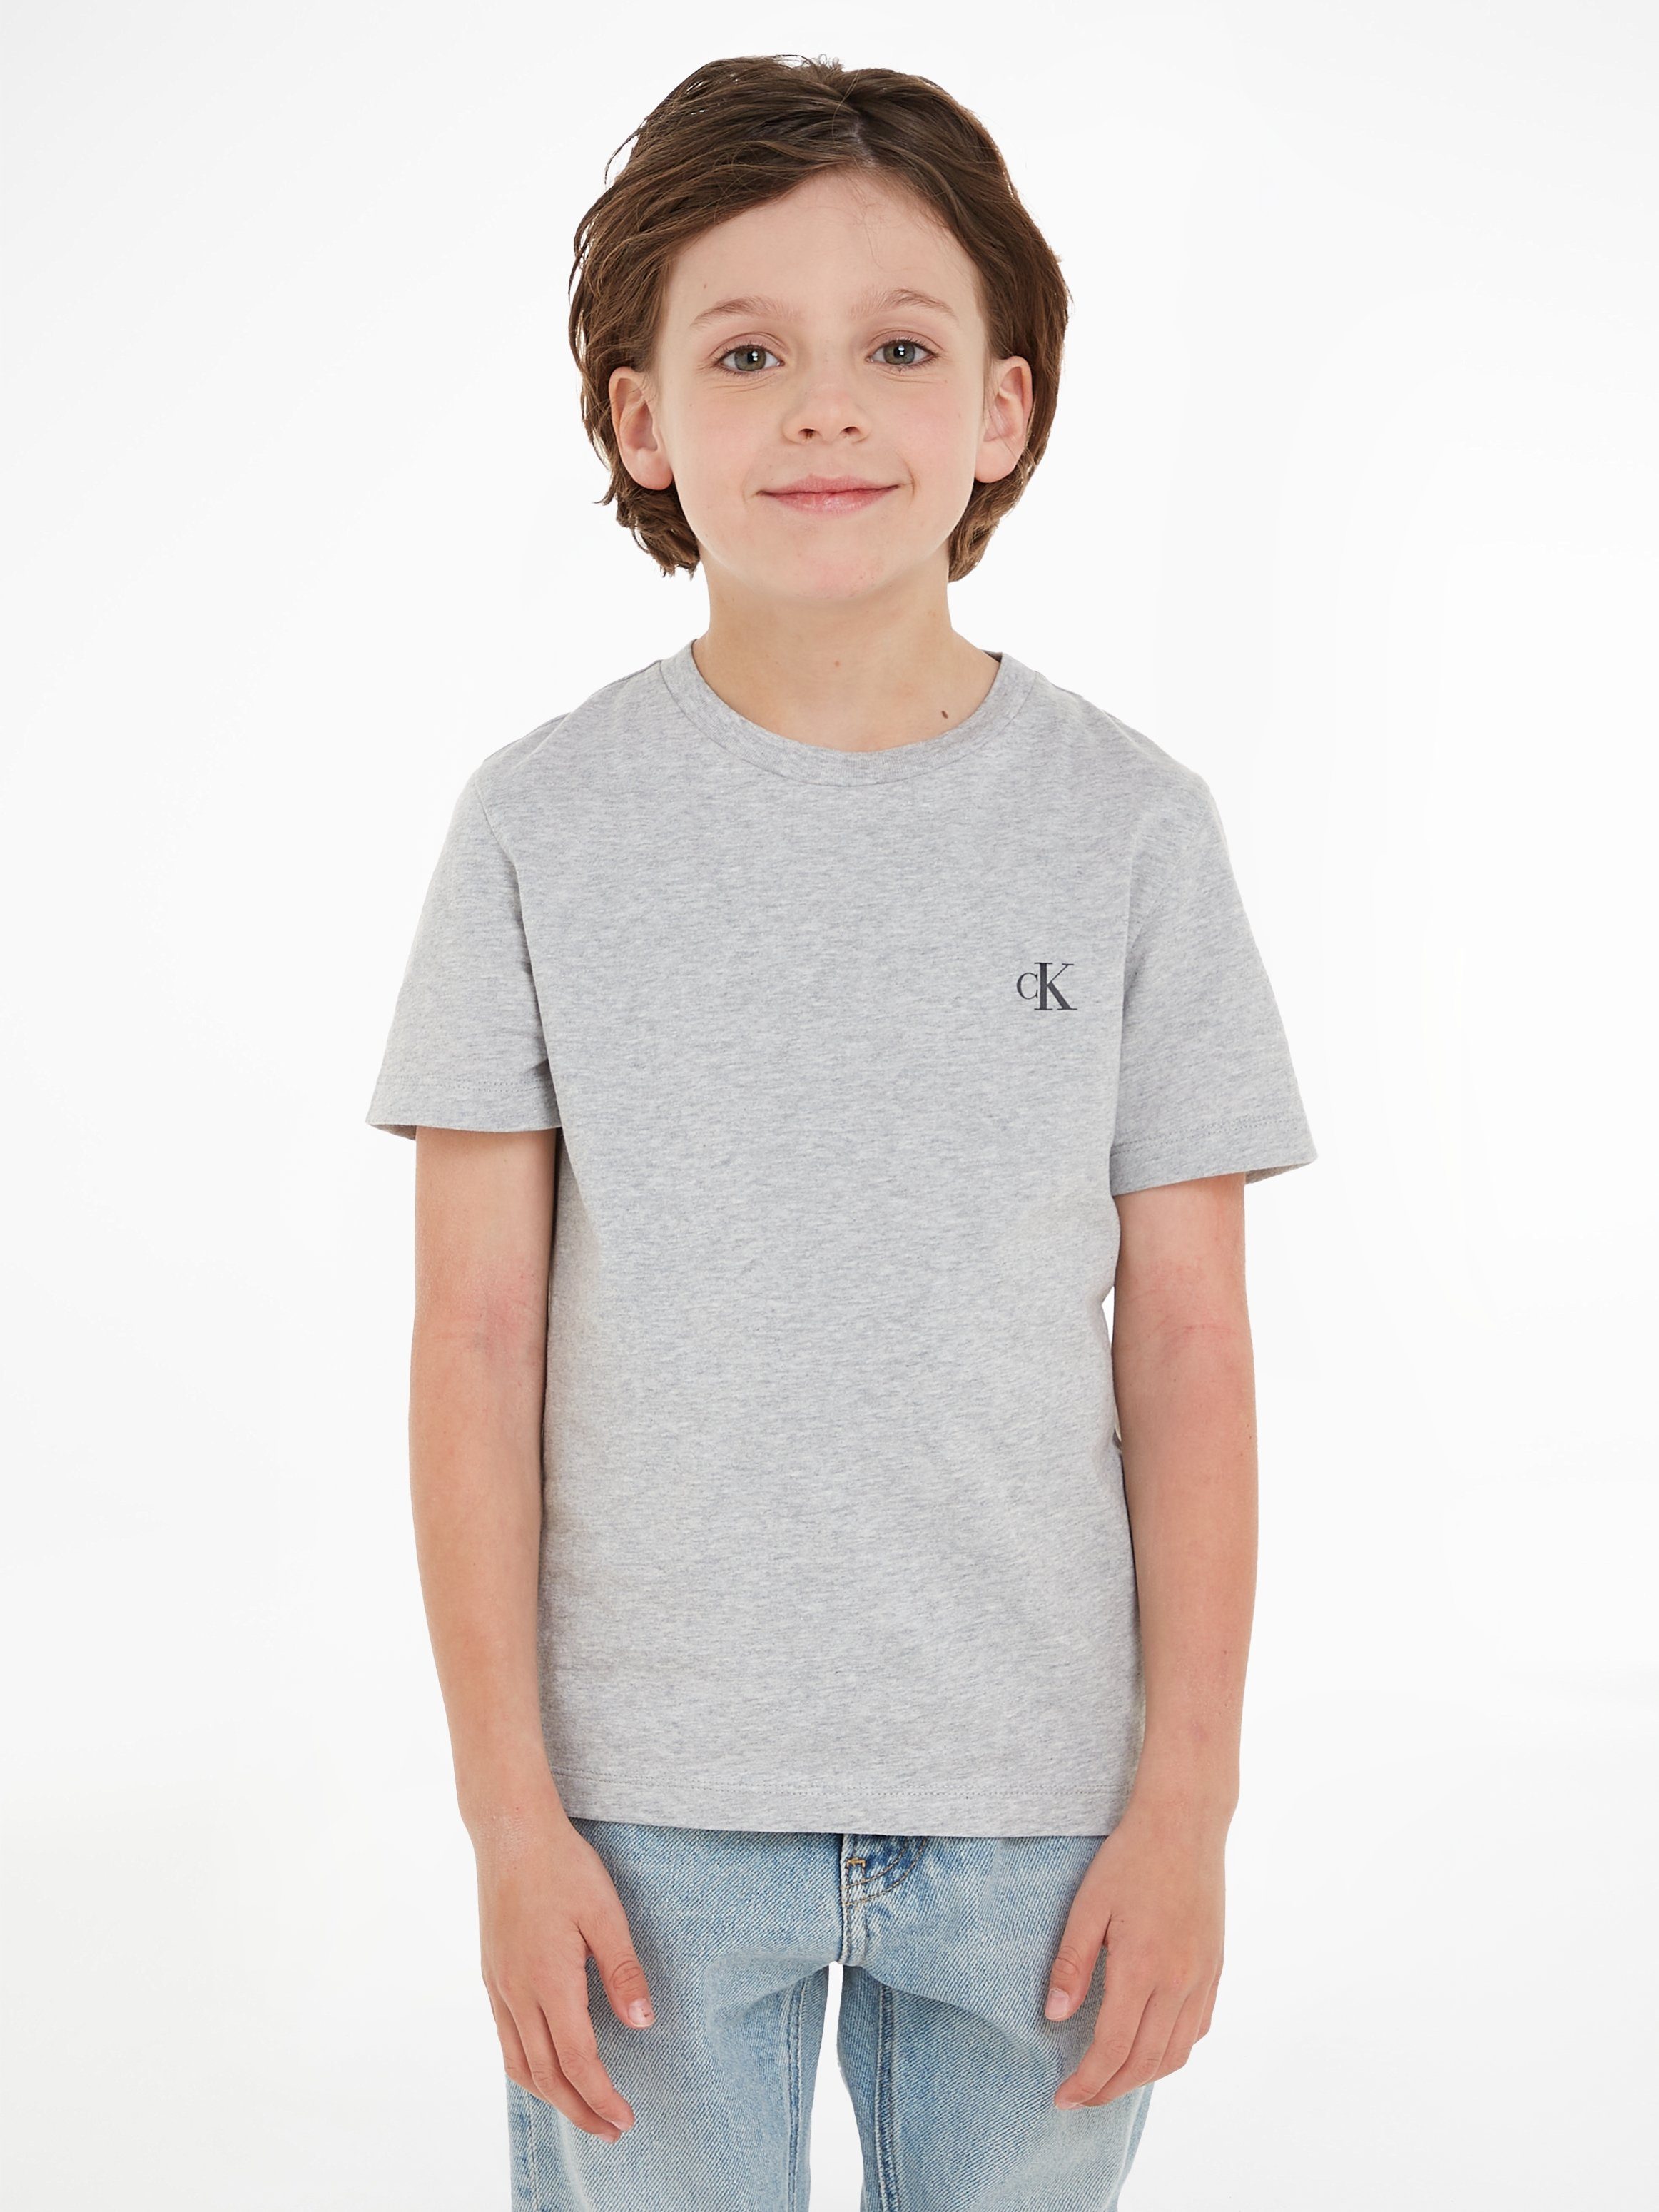 Calvin Klein Jeans TOP Logodruck T-Shirt 2-PACK MONOGRAM blau-grau mit